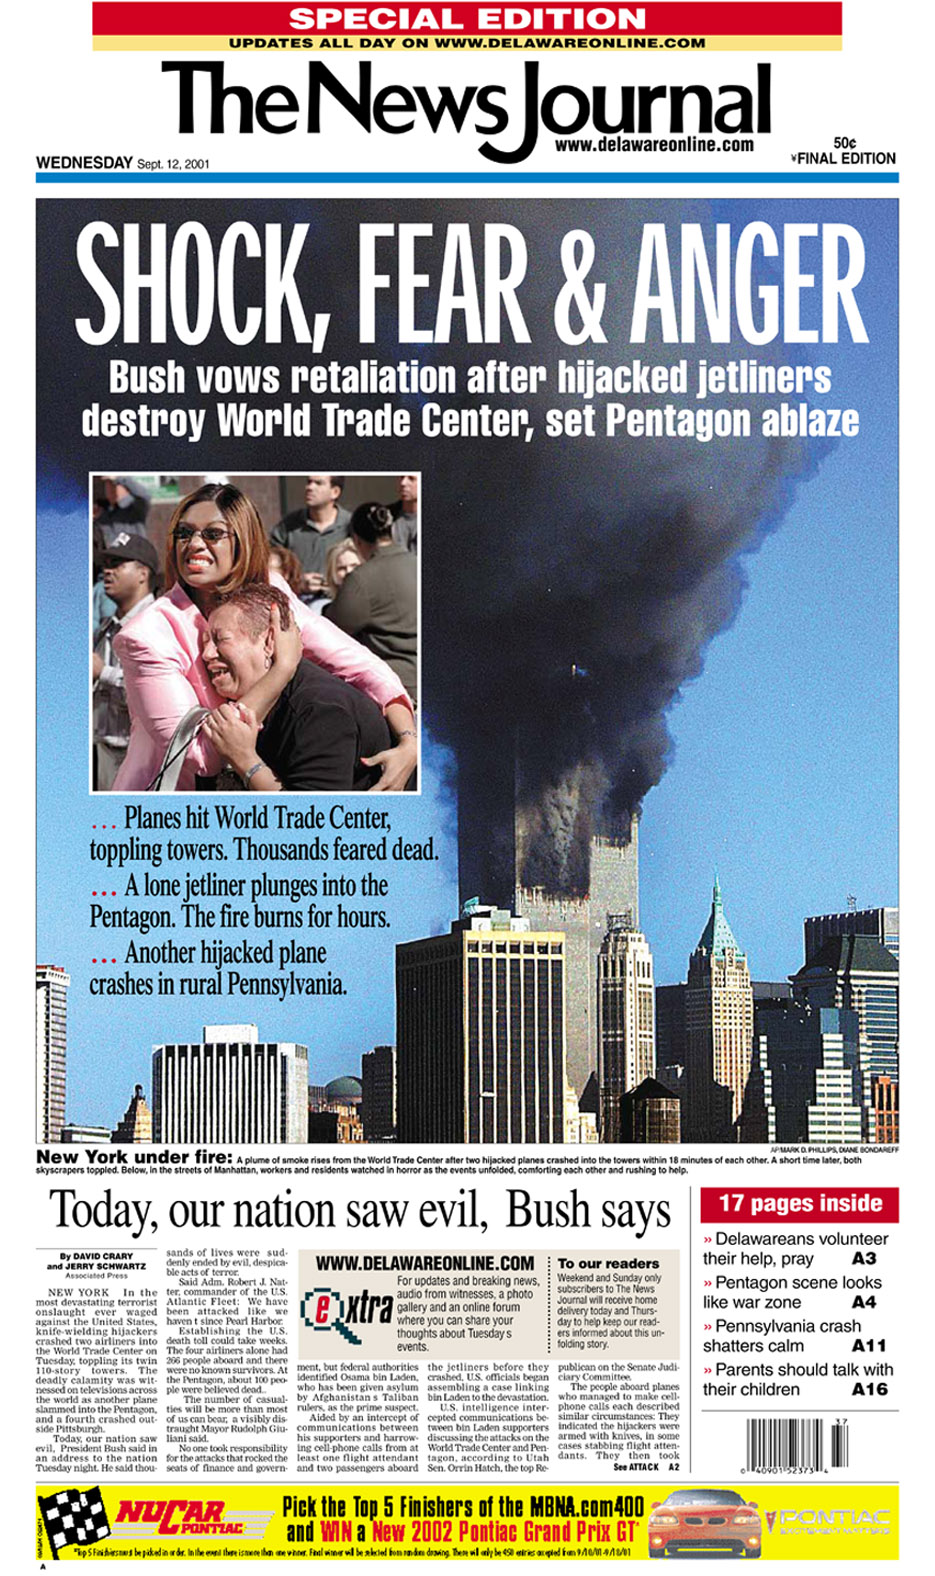 The News Journal | Shock, Fear & Anger